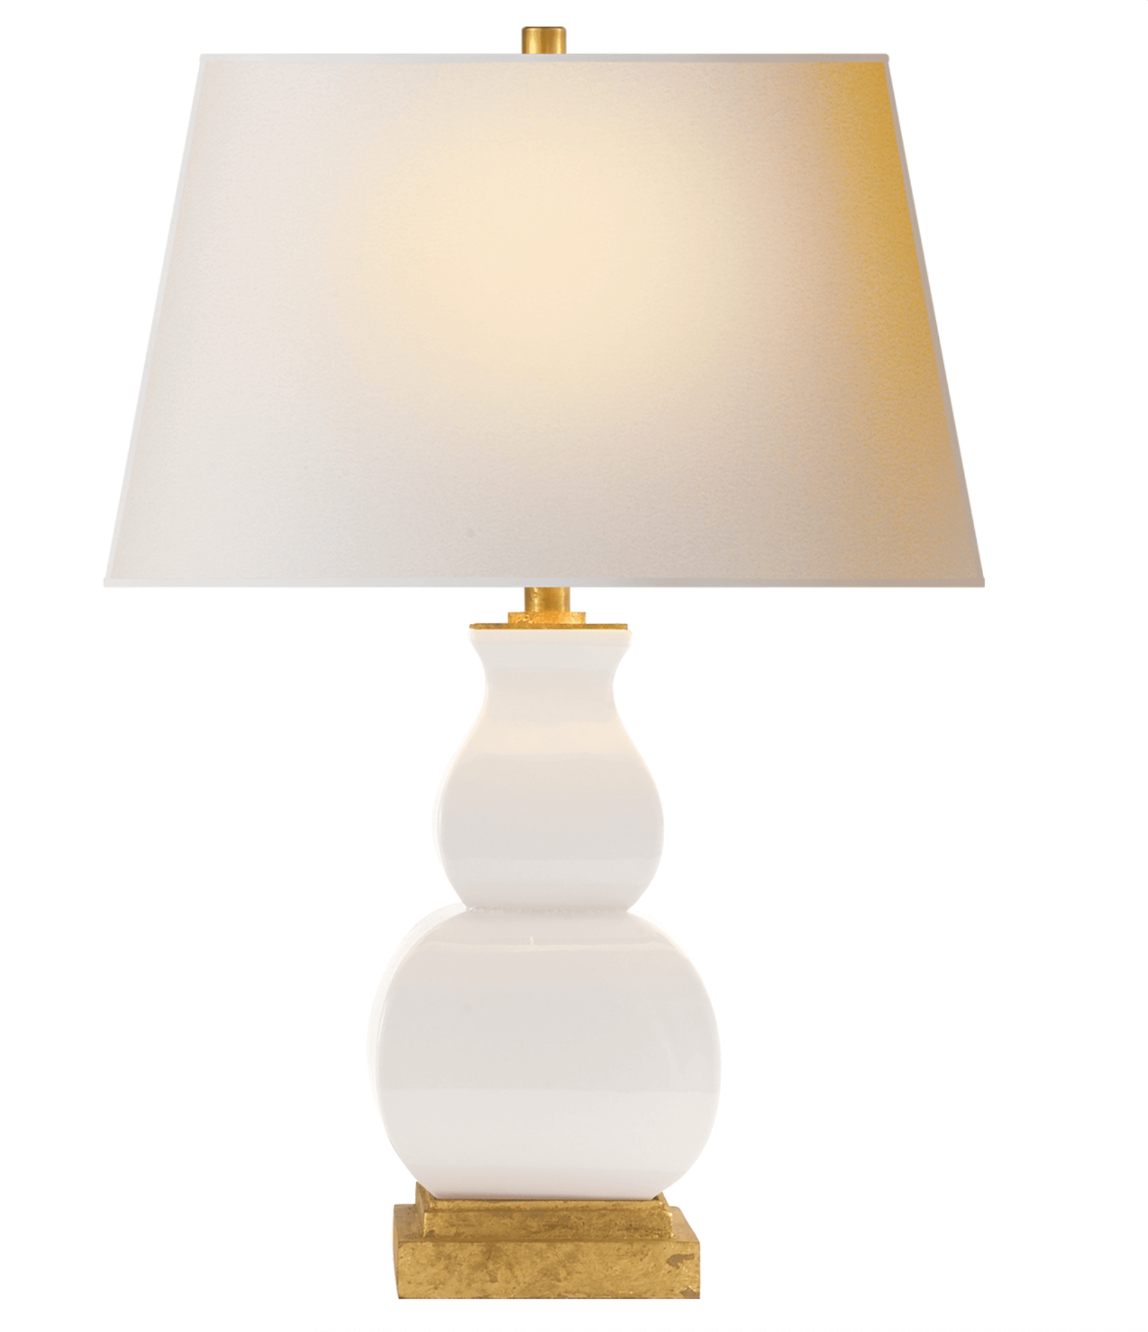 Ivory gourd lamp